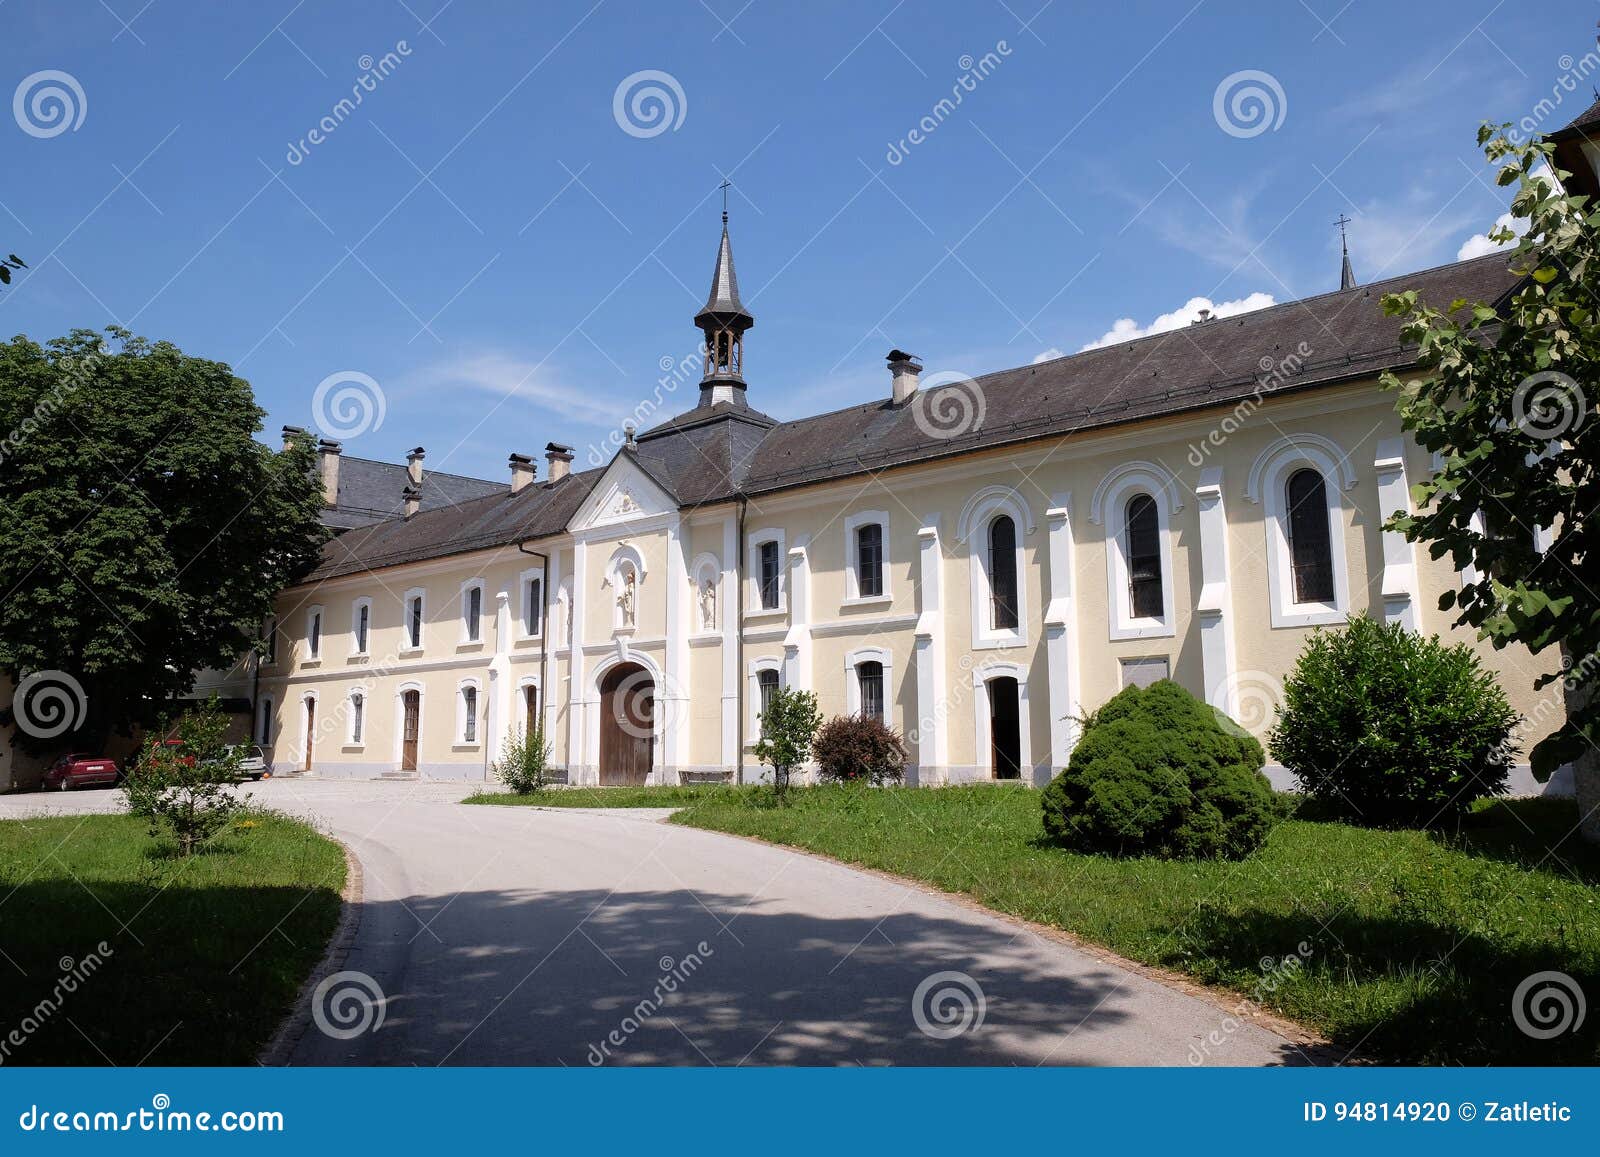 carthusian monastery in pleterje, slovenia